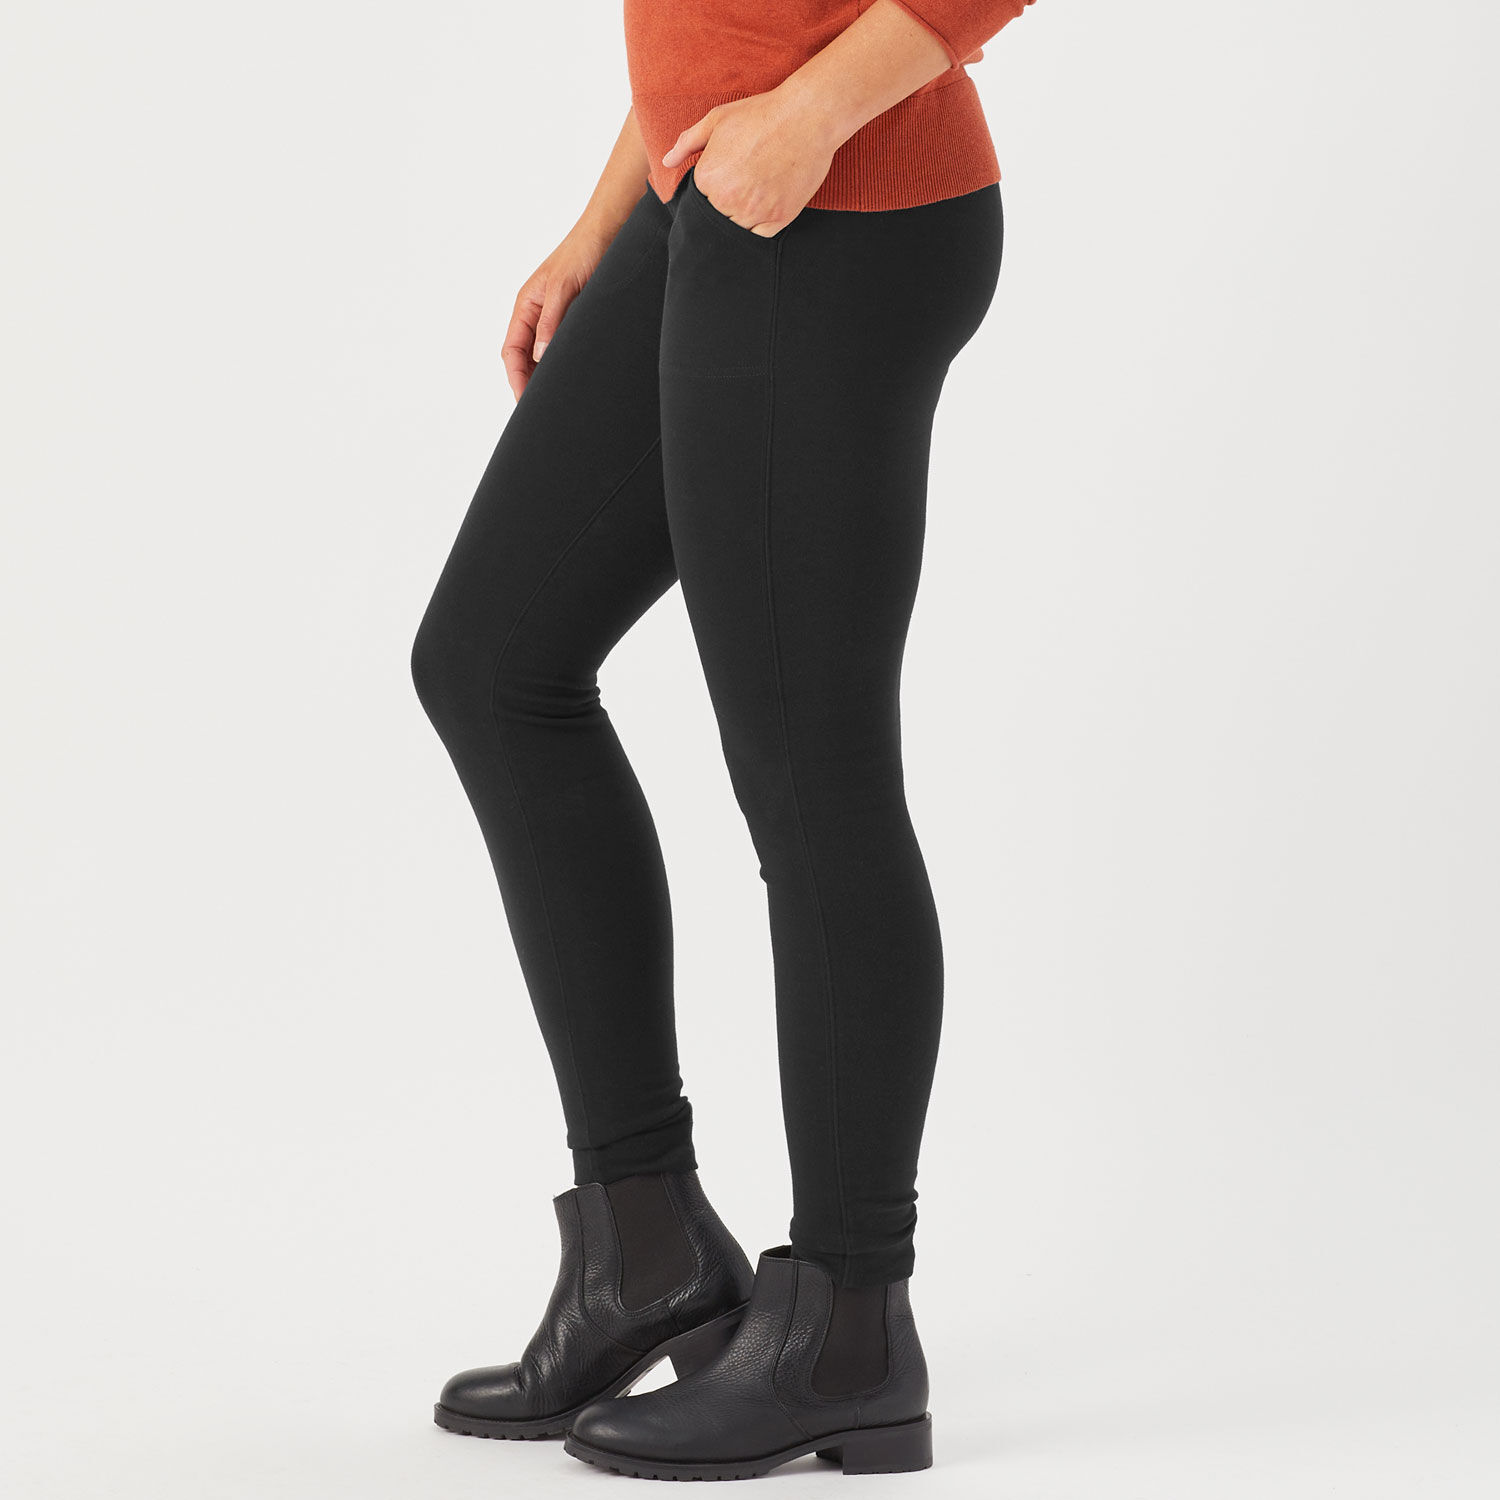 Jockey Women's Cotton Stretch Basic 7/8 Legging with Side Pocket Charcoal  at Amazon Women's Clothing store